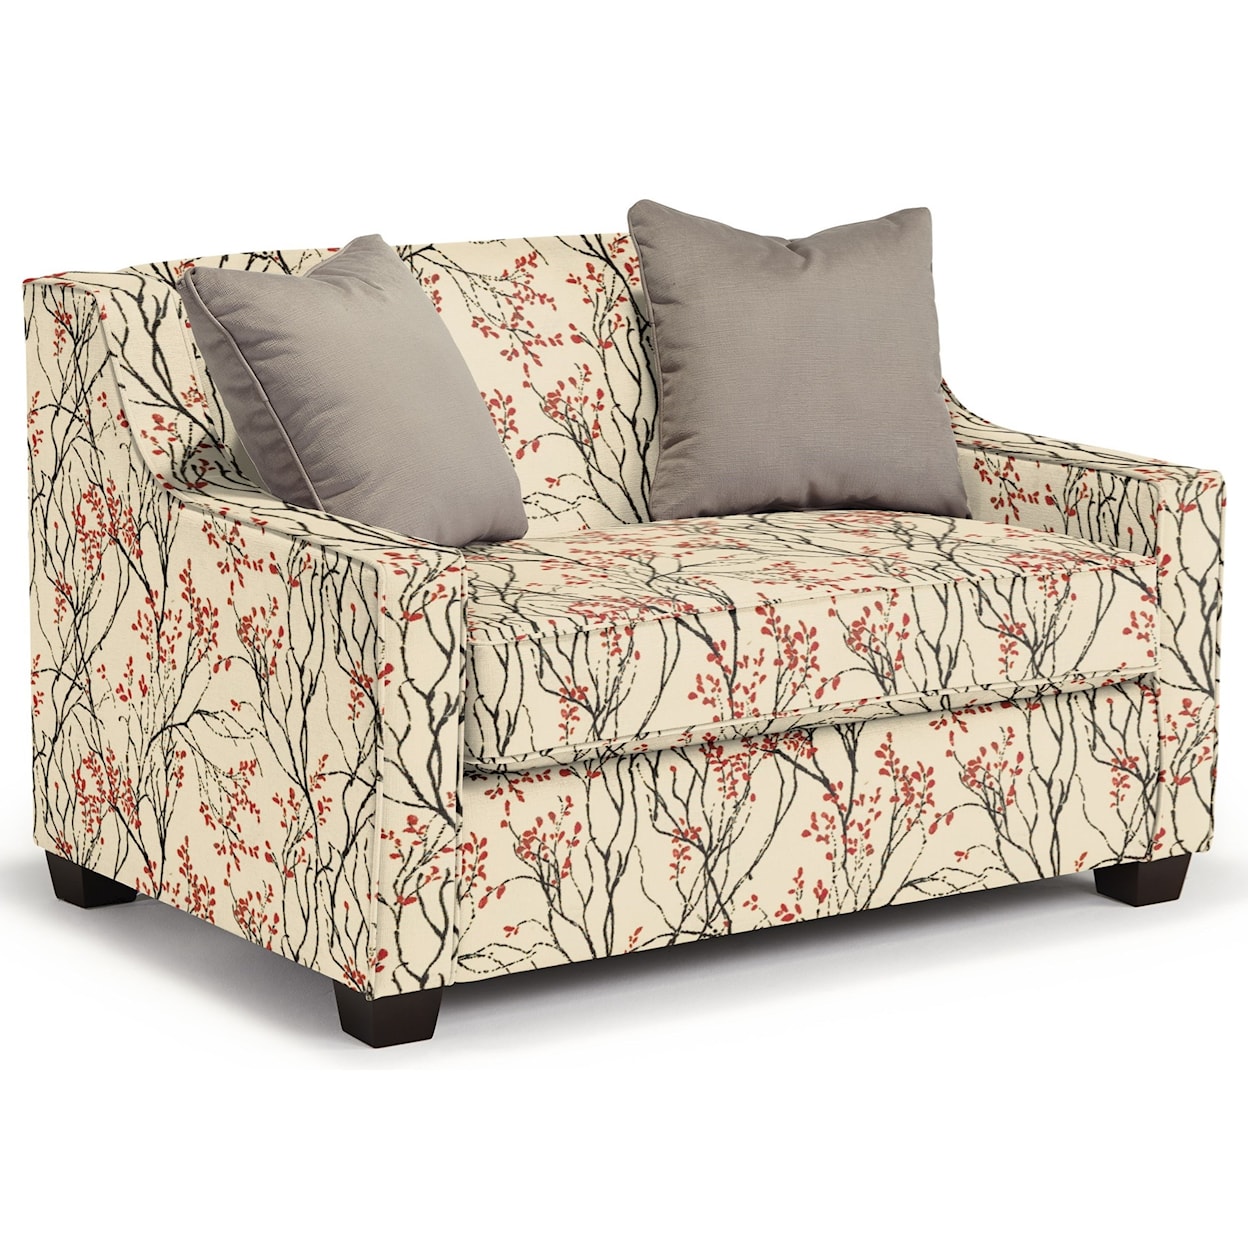 Best Home Furnishings Marinette Twin Air Dream Sleeper Chair